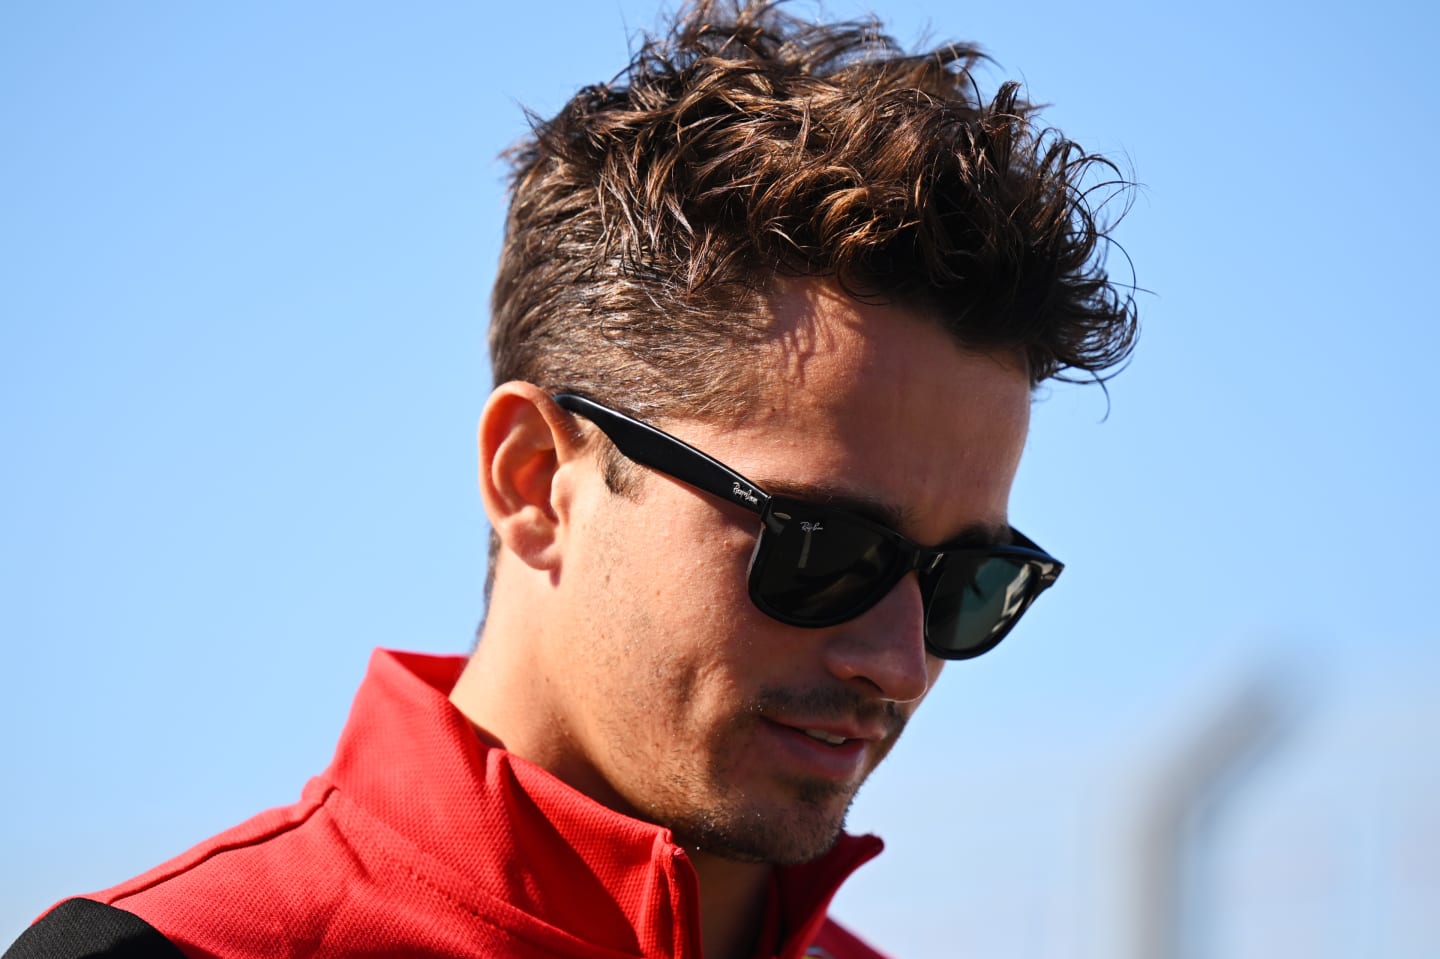 ZANDVOORT, NETHERLANDS - SEPTEMBER 01: Charles Leclerc of Monaco and Ferrari looks on in the